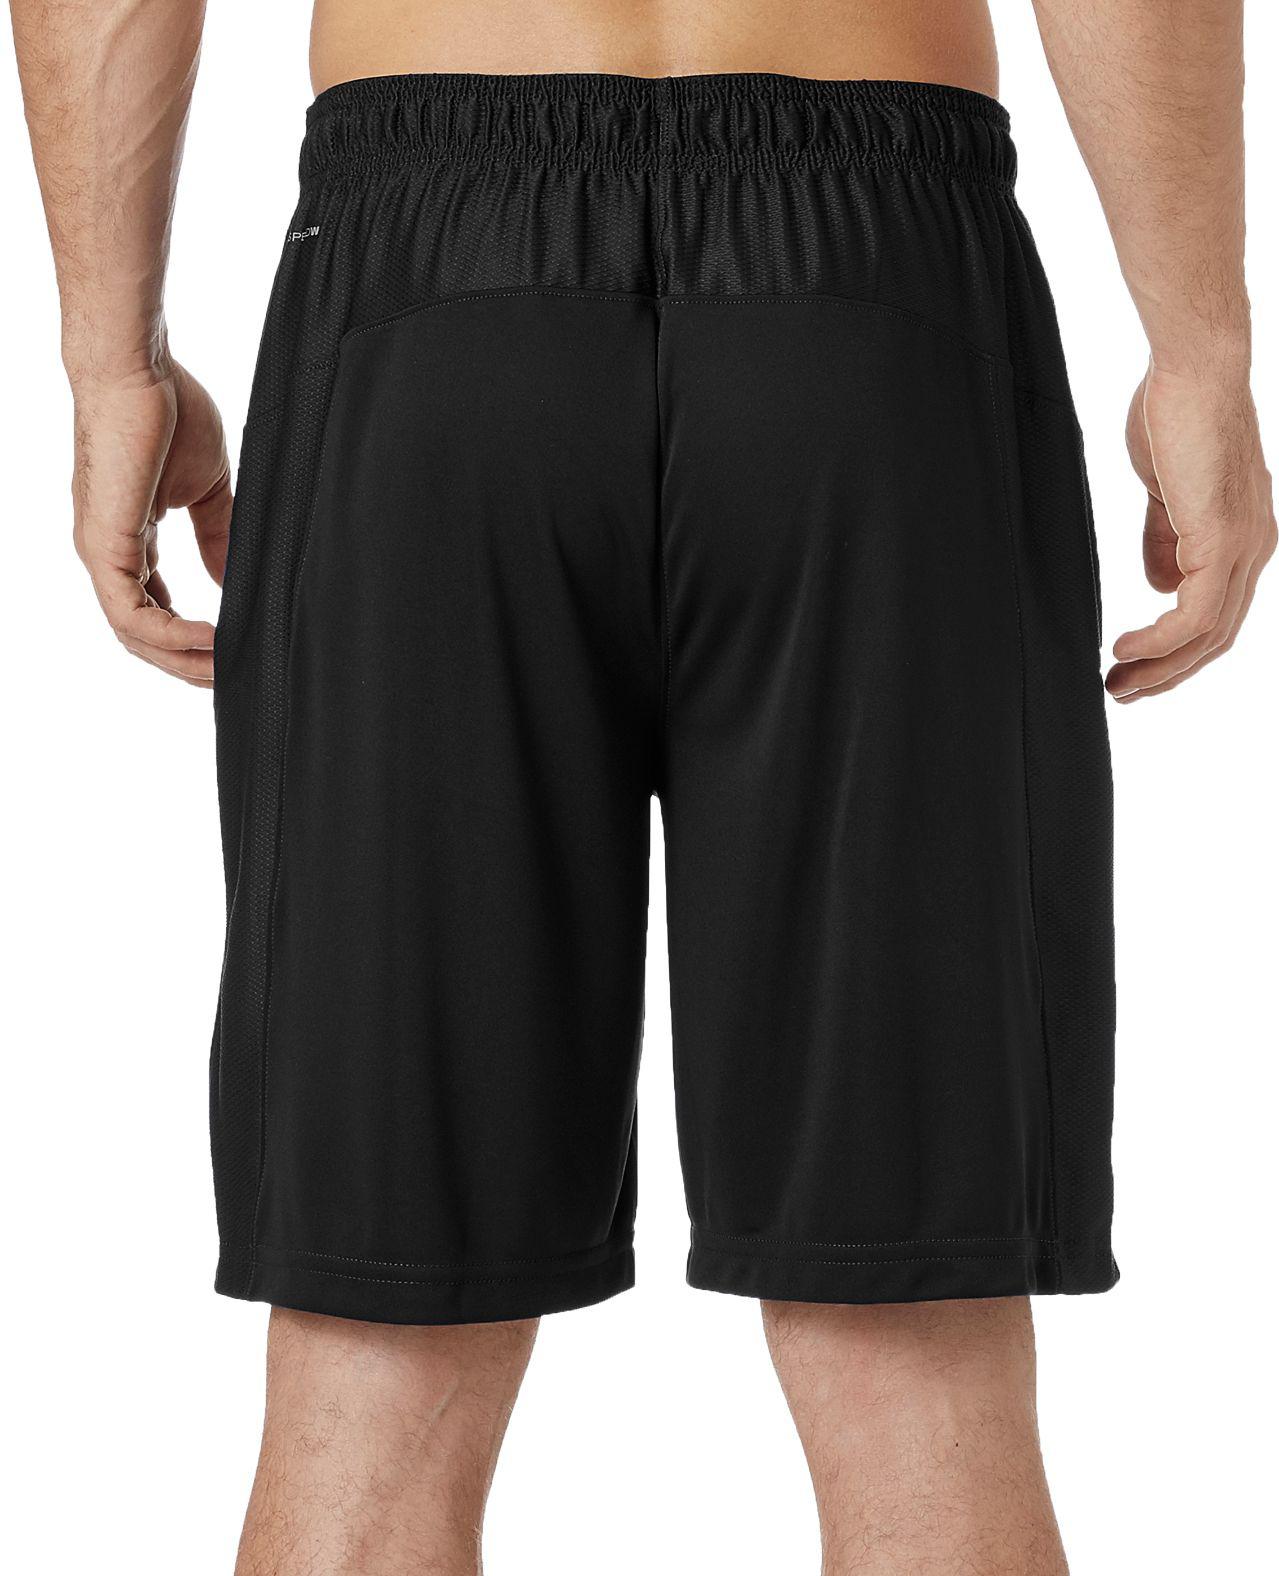 reebok men's solid performance shorts